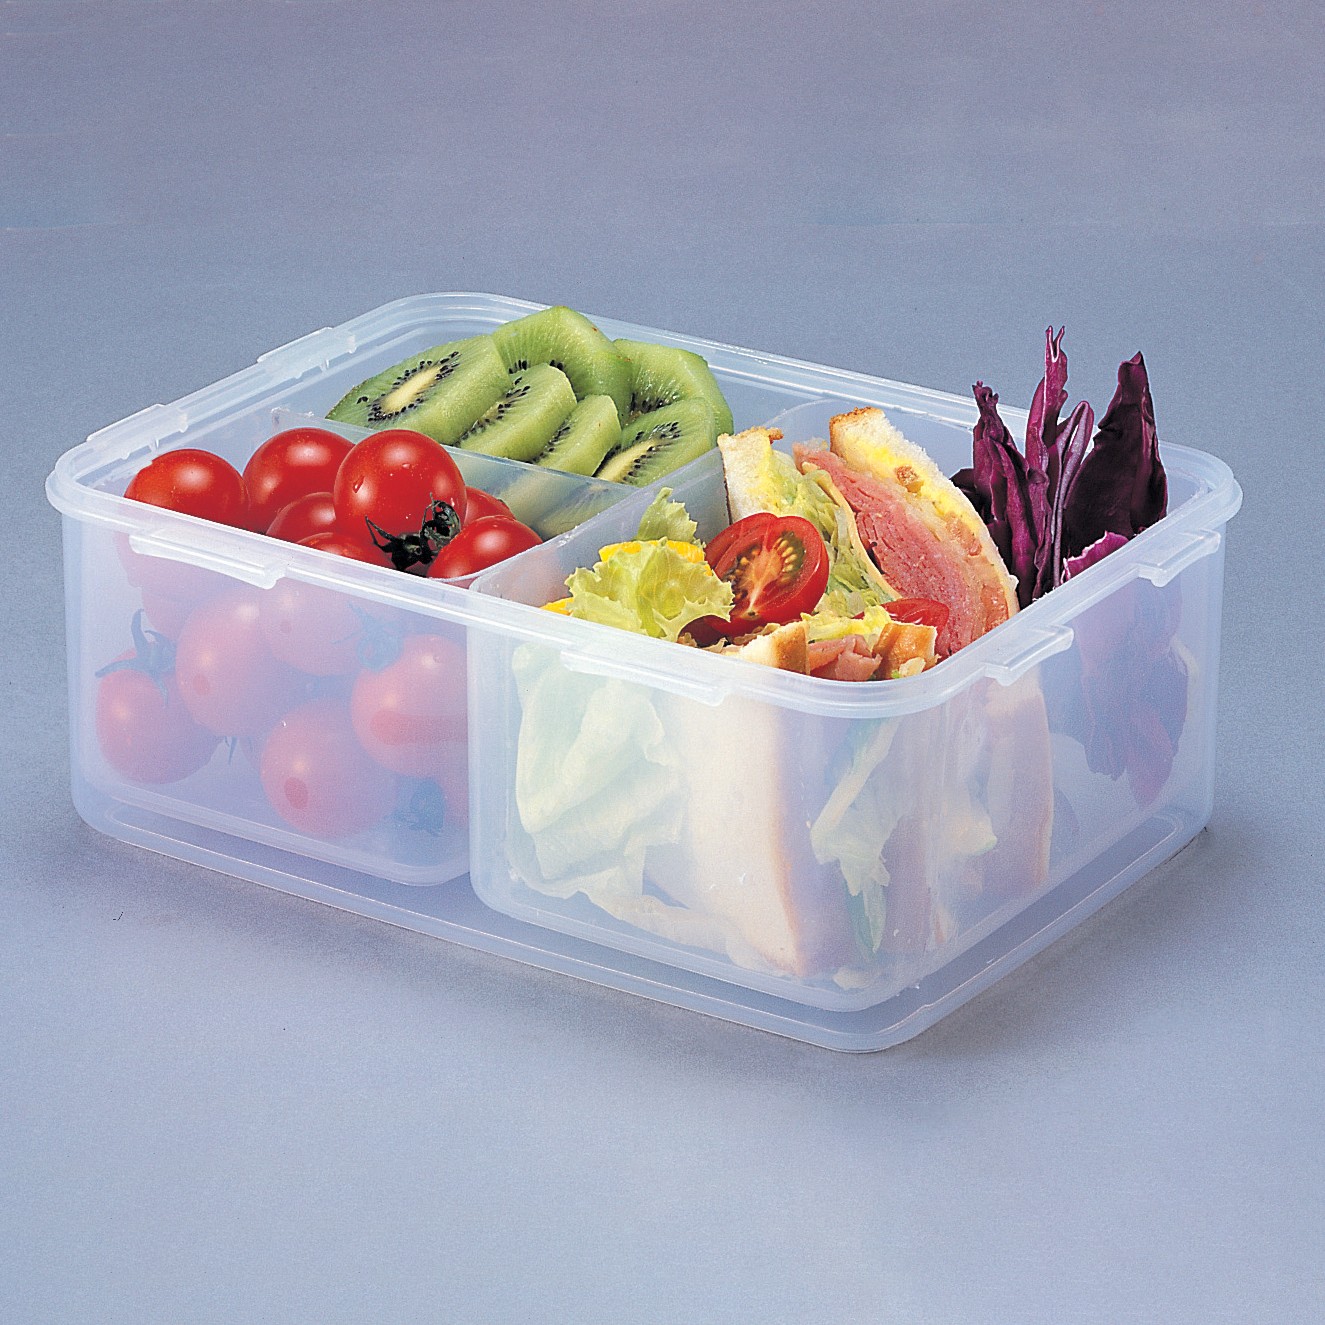 Food Storage Containers & Locking Lids - 26 Piece Set